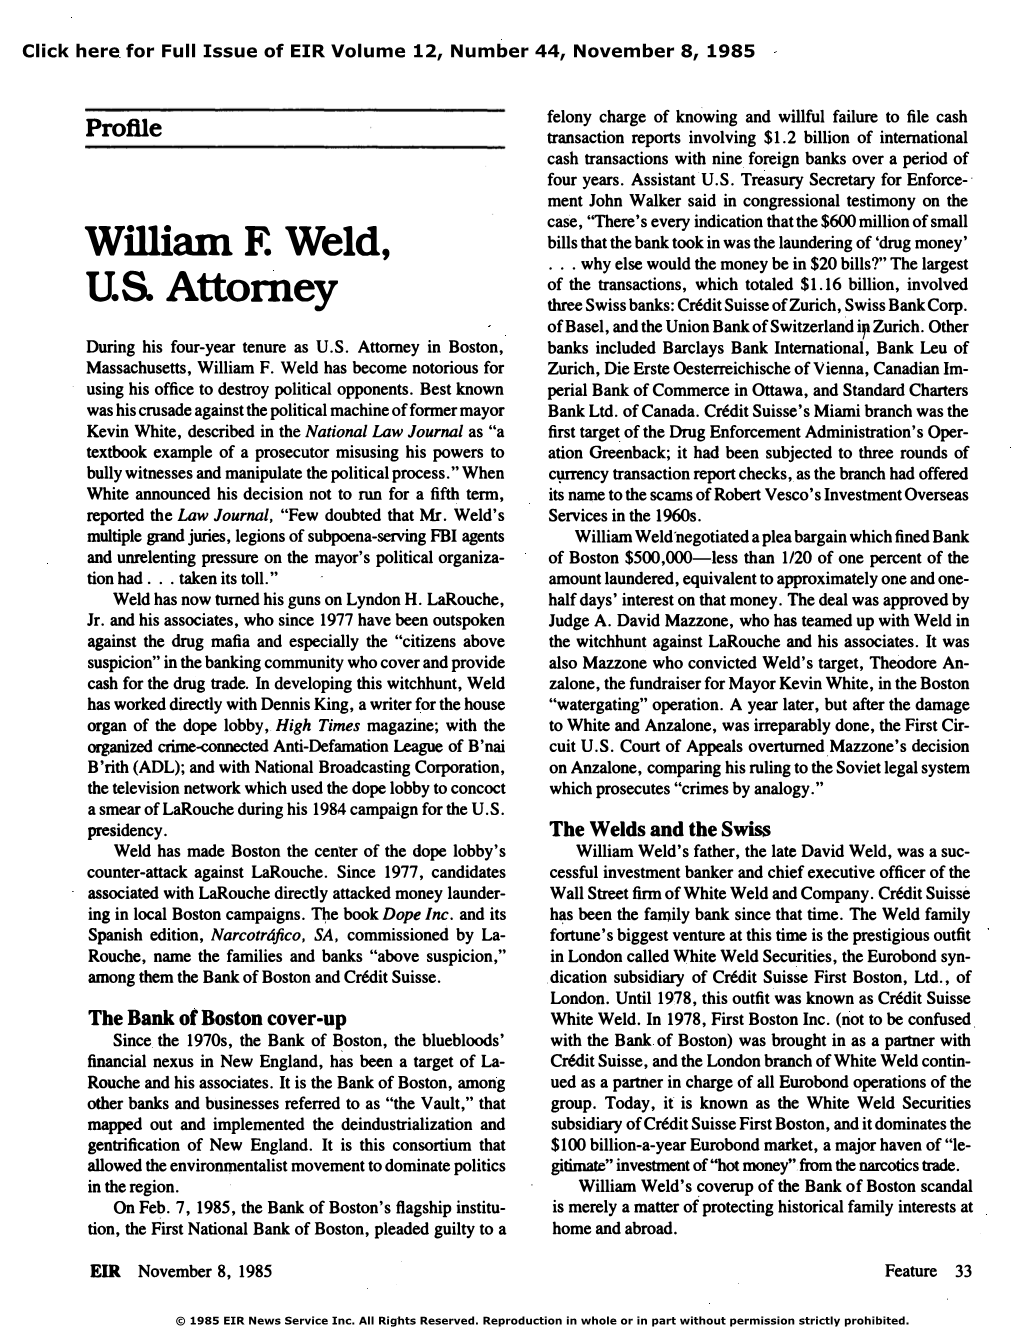 William F. Weld, U.S. Attorney